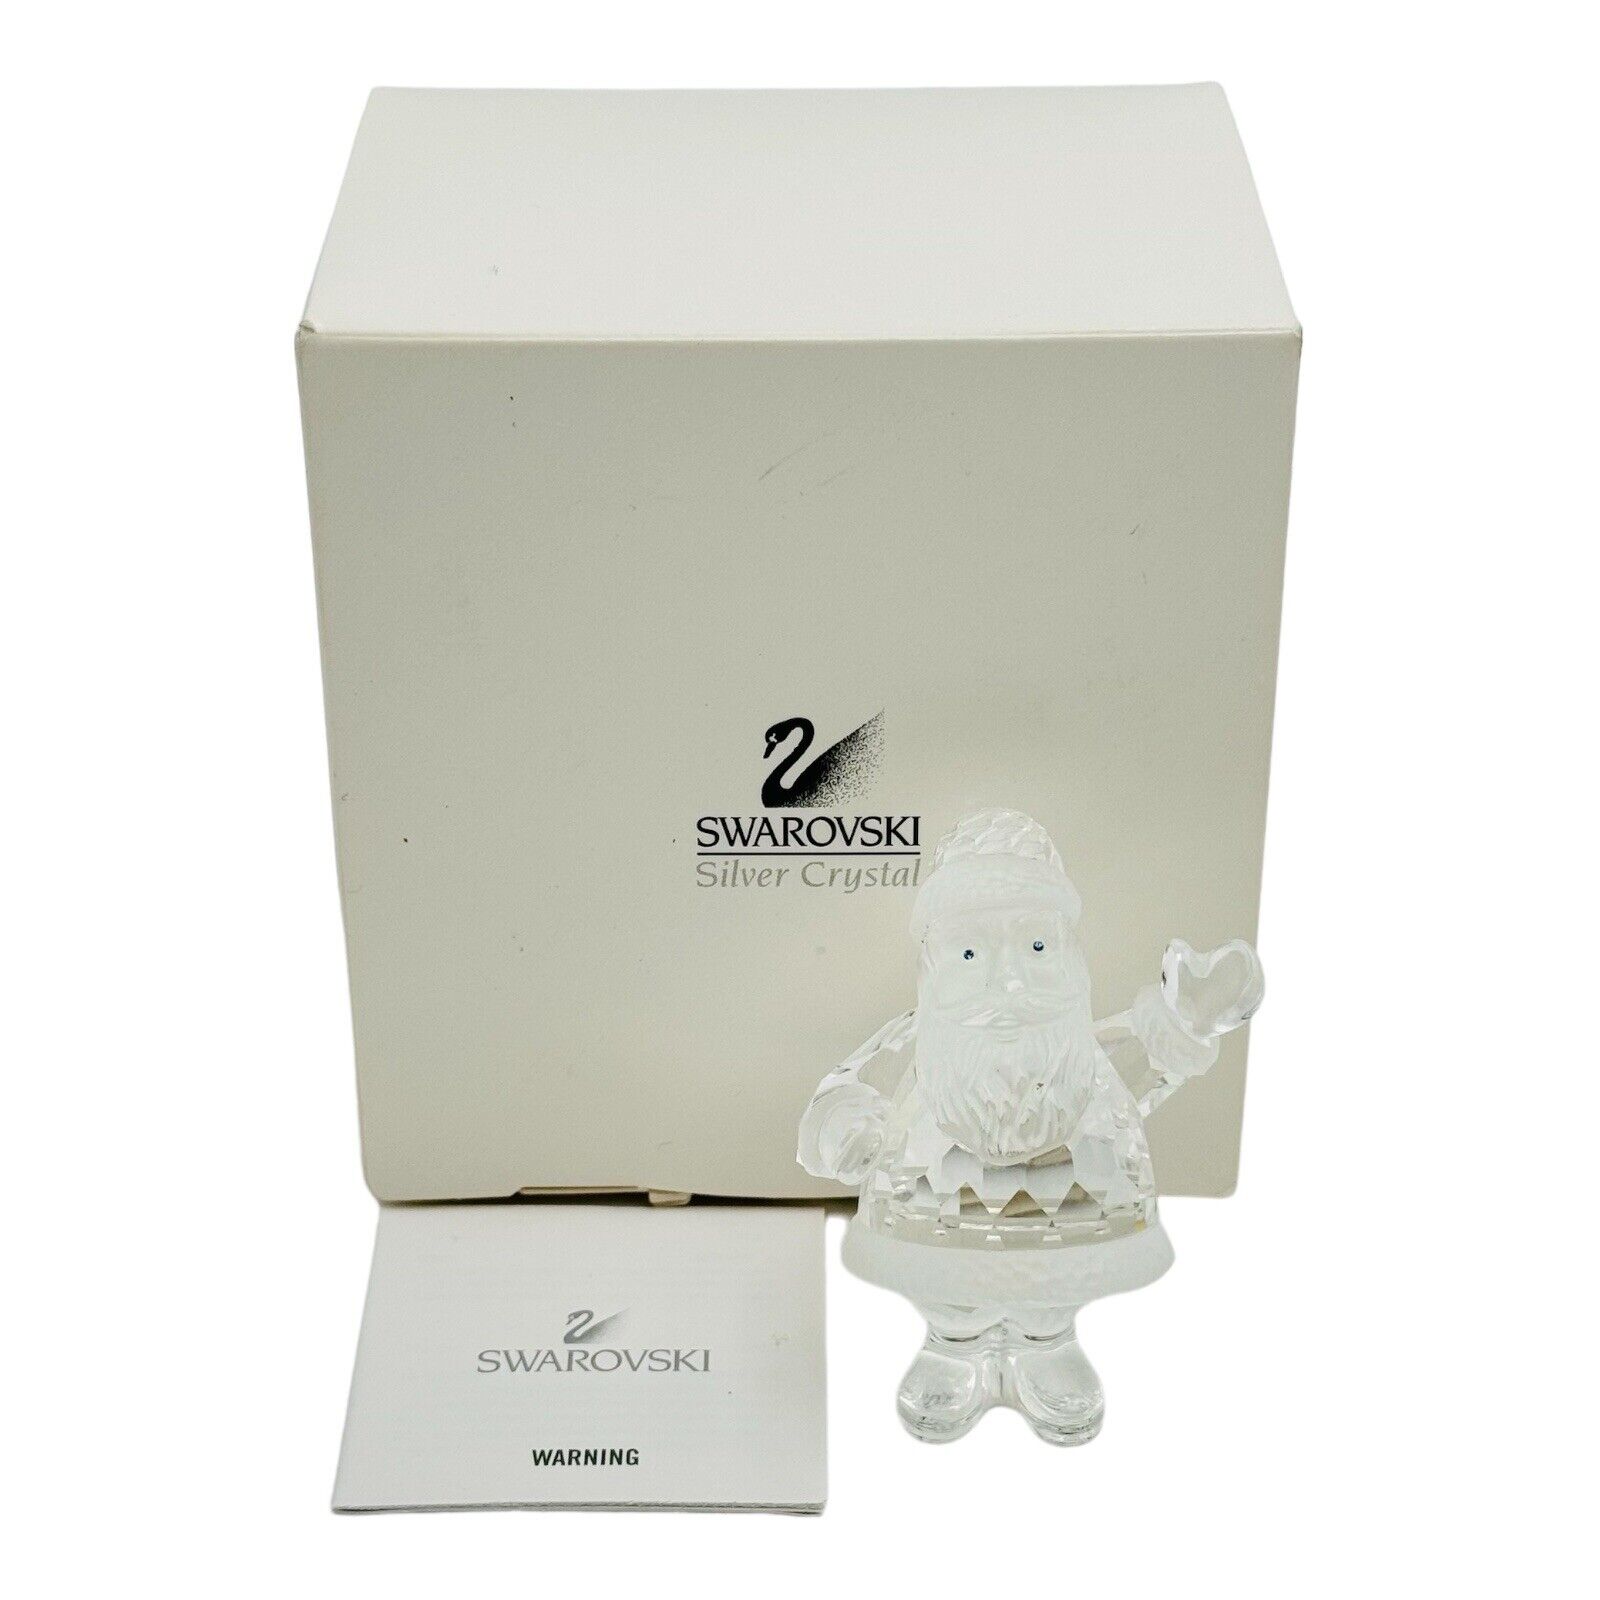 Swarovski Silver Crystal Santa Claus Figurine #221362 NEW IN BOX